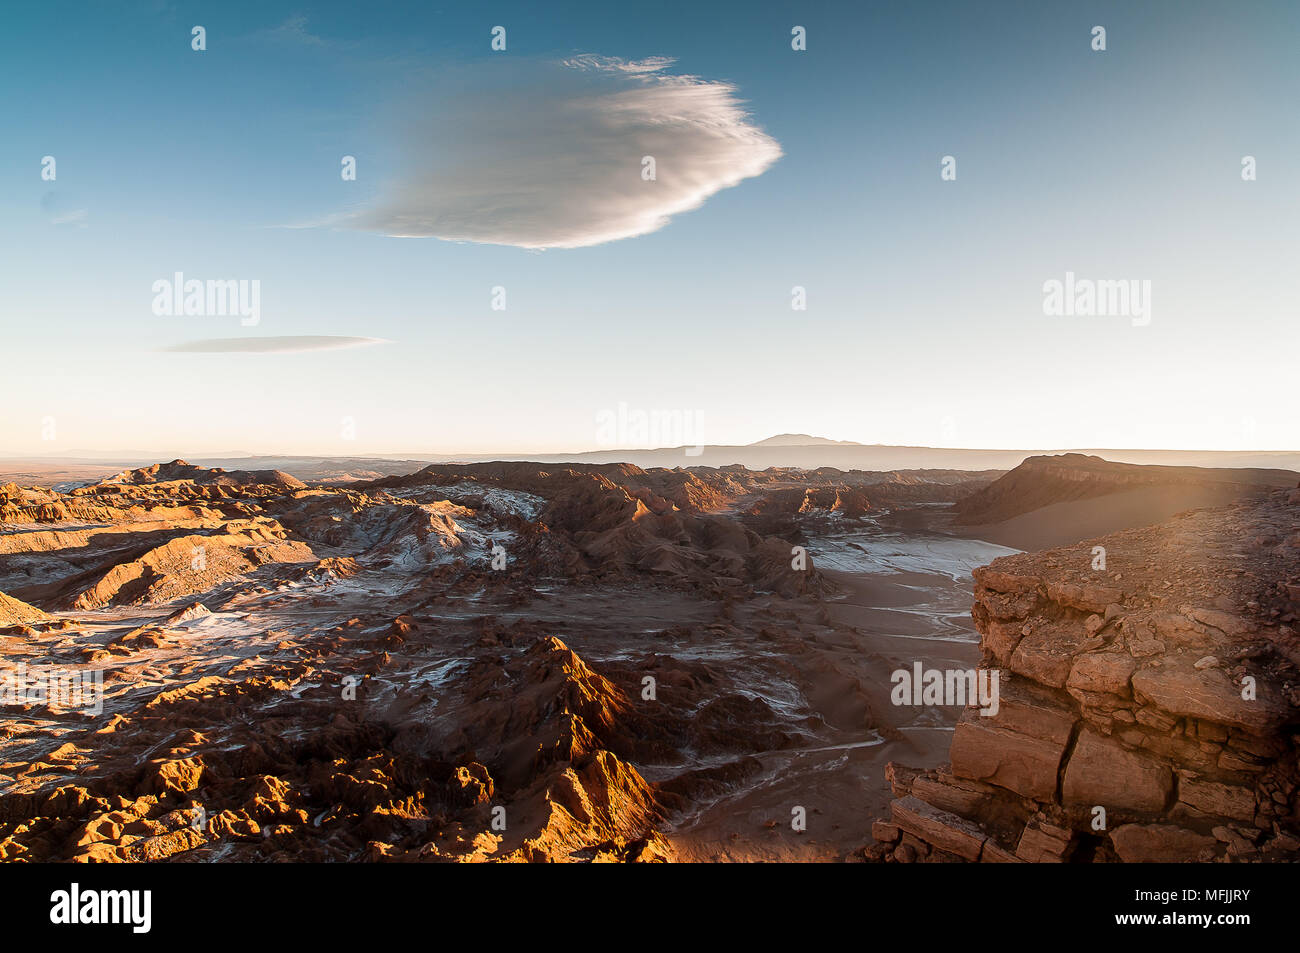 Moon Valley View, Atacama, Cile Foto Stock